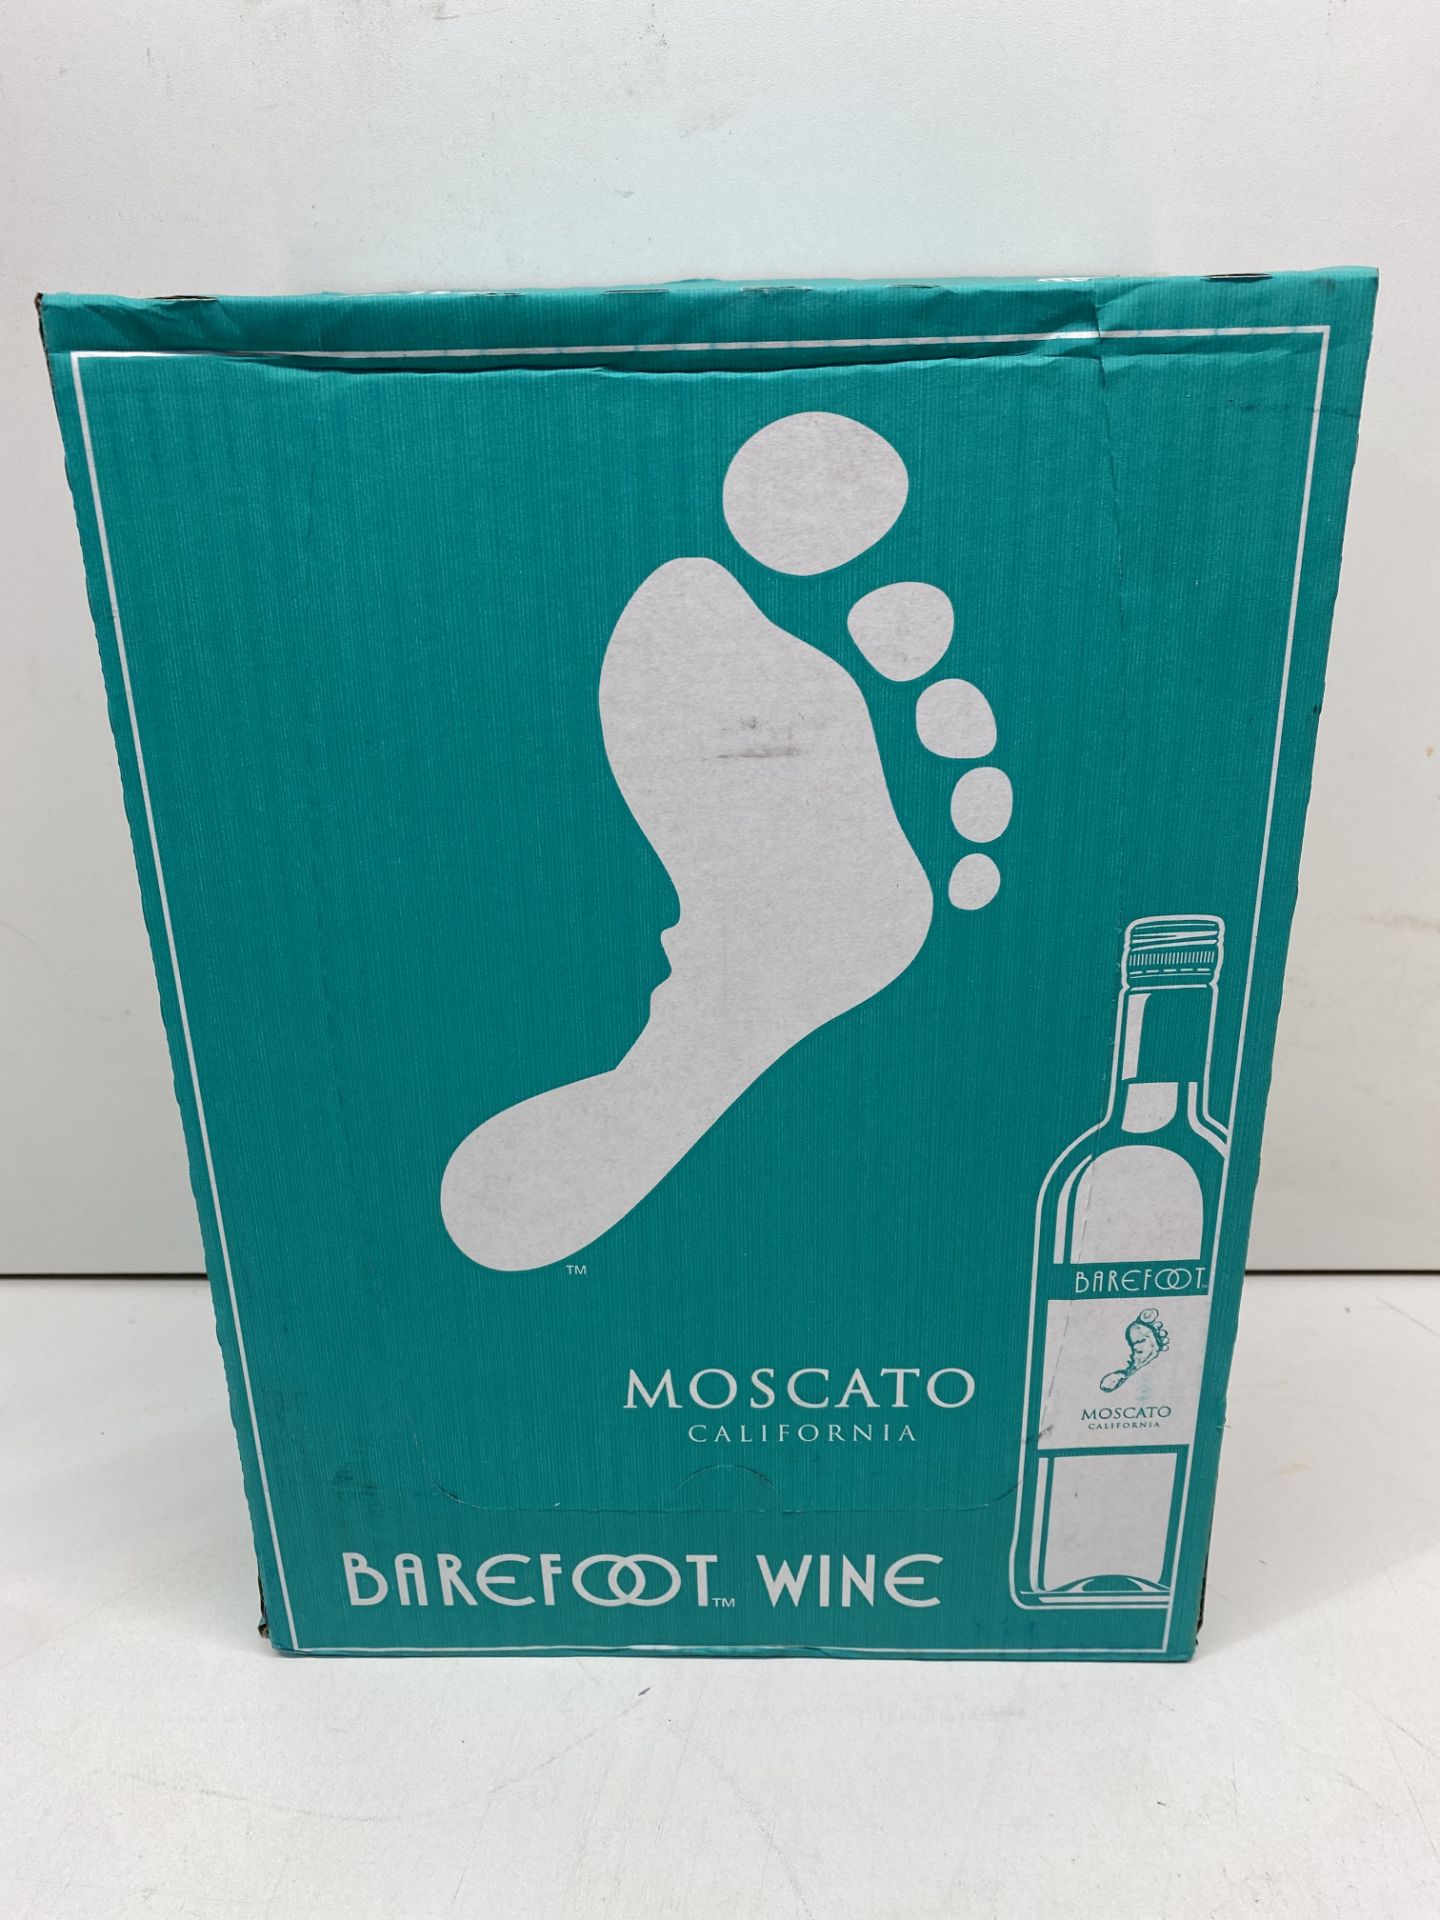 12 x Bottles Of Barefoot White Wine - See Description - Image 2 of 5